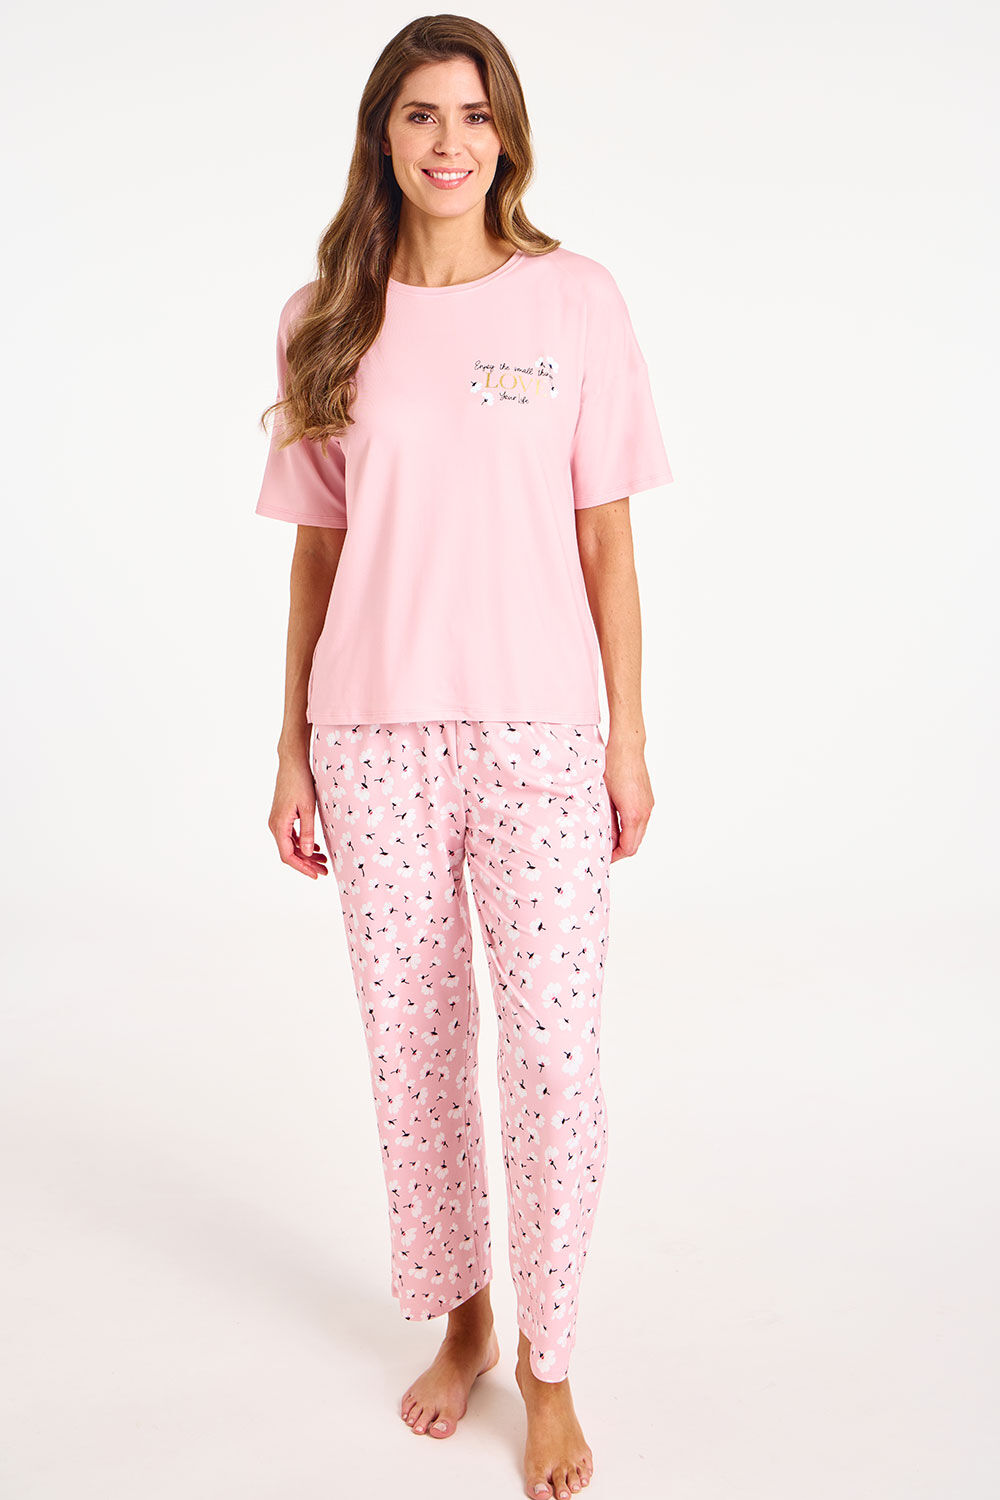 Bonmarche Short Sleeve Pink Floral Foil Print Pyjama Set, Size: 16-18